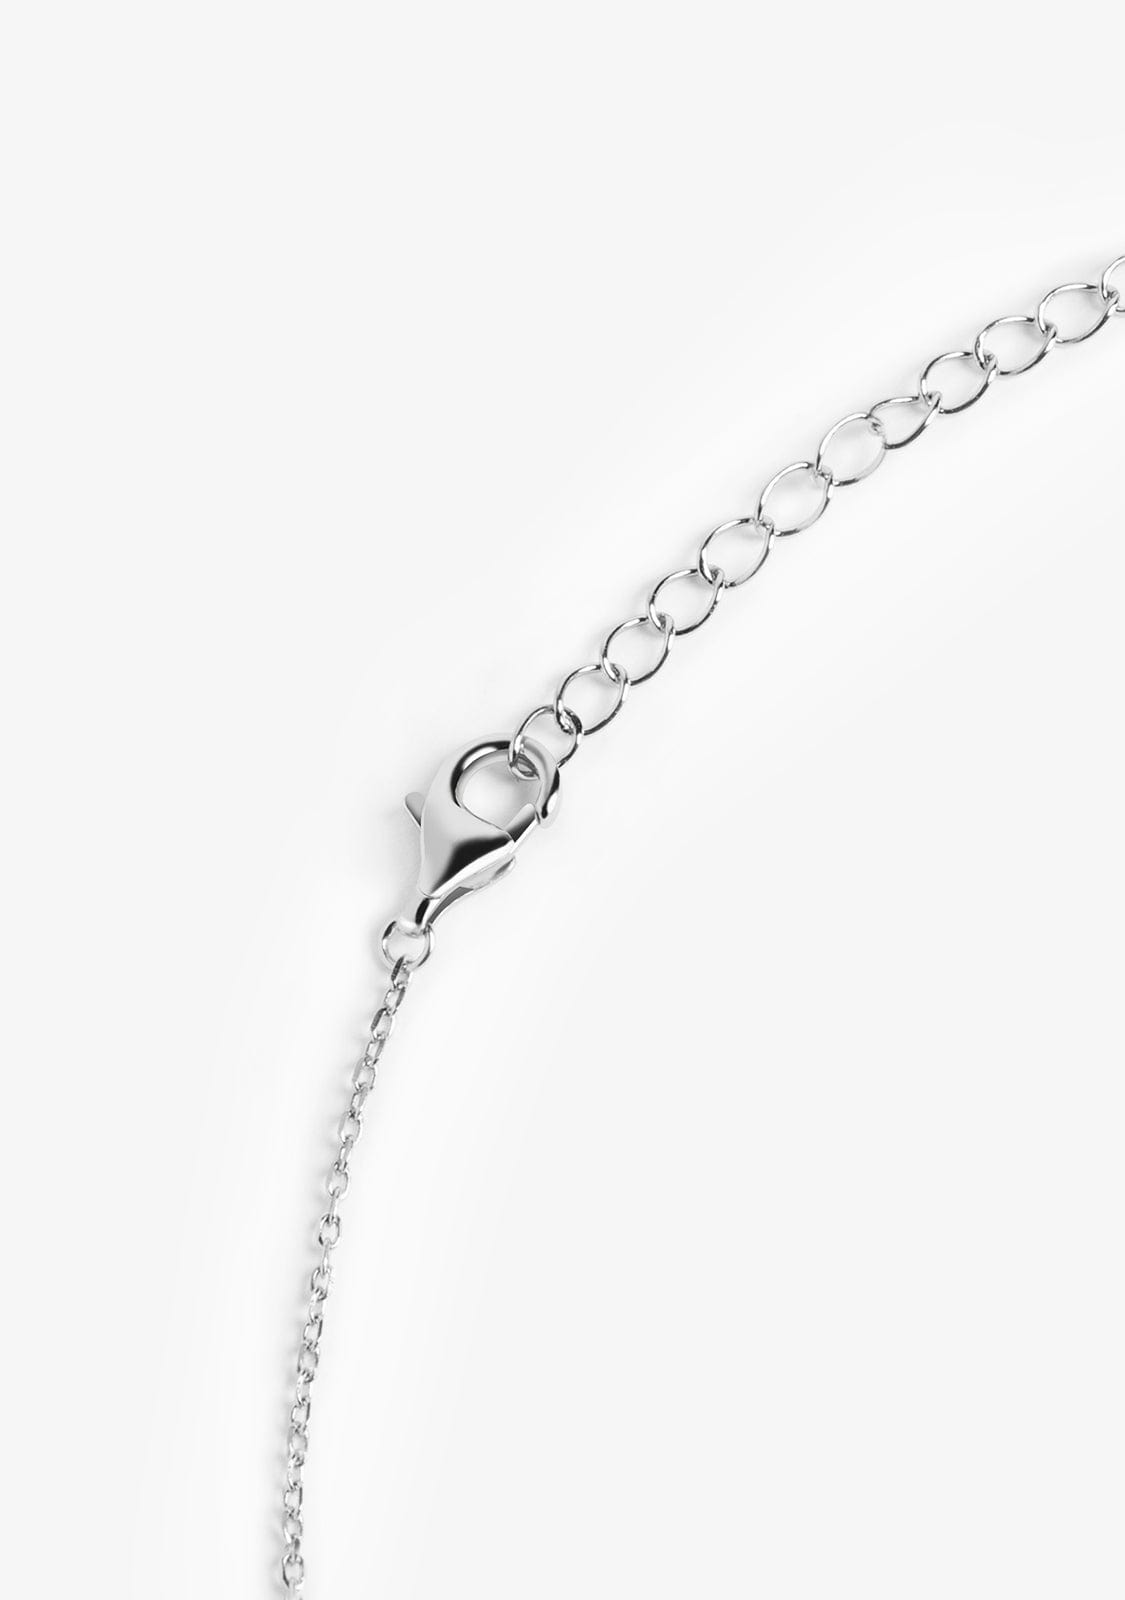 Necklace Herz Silver